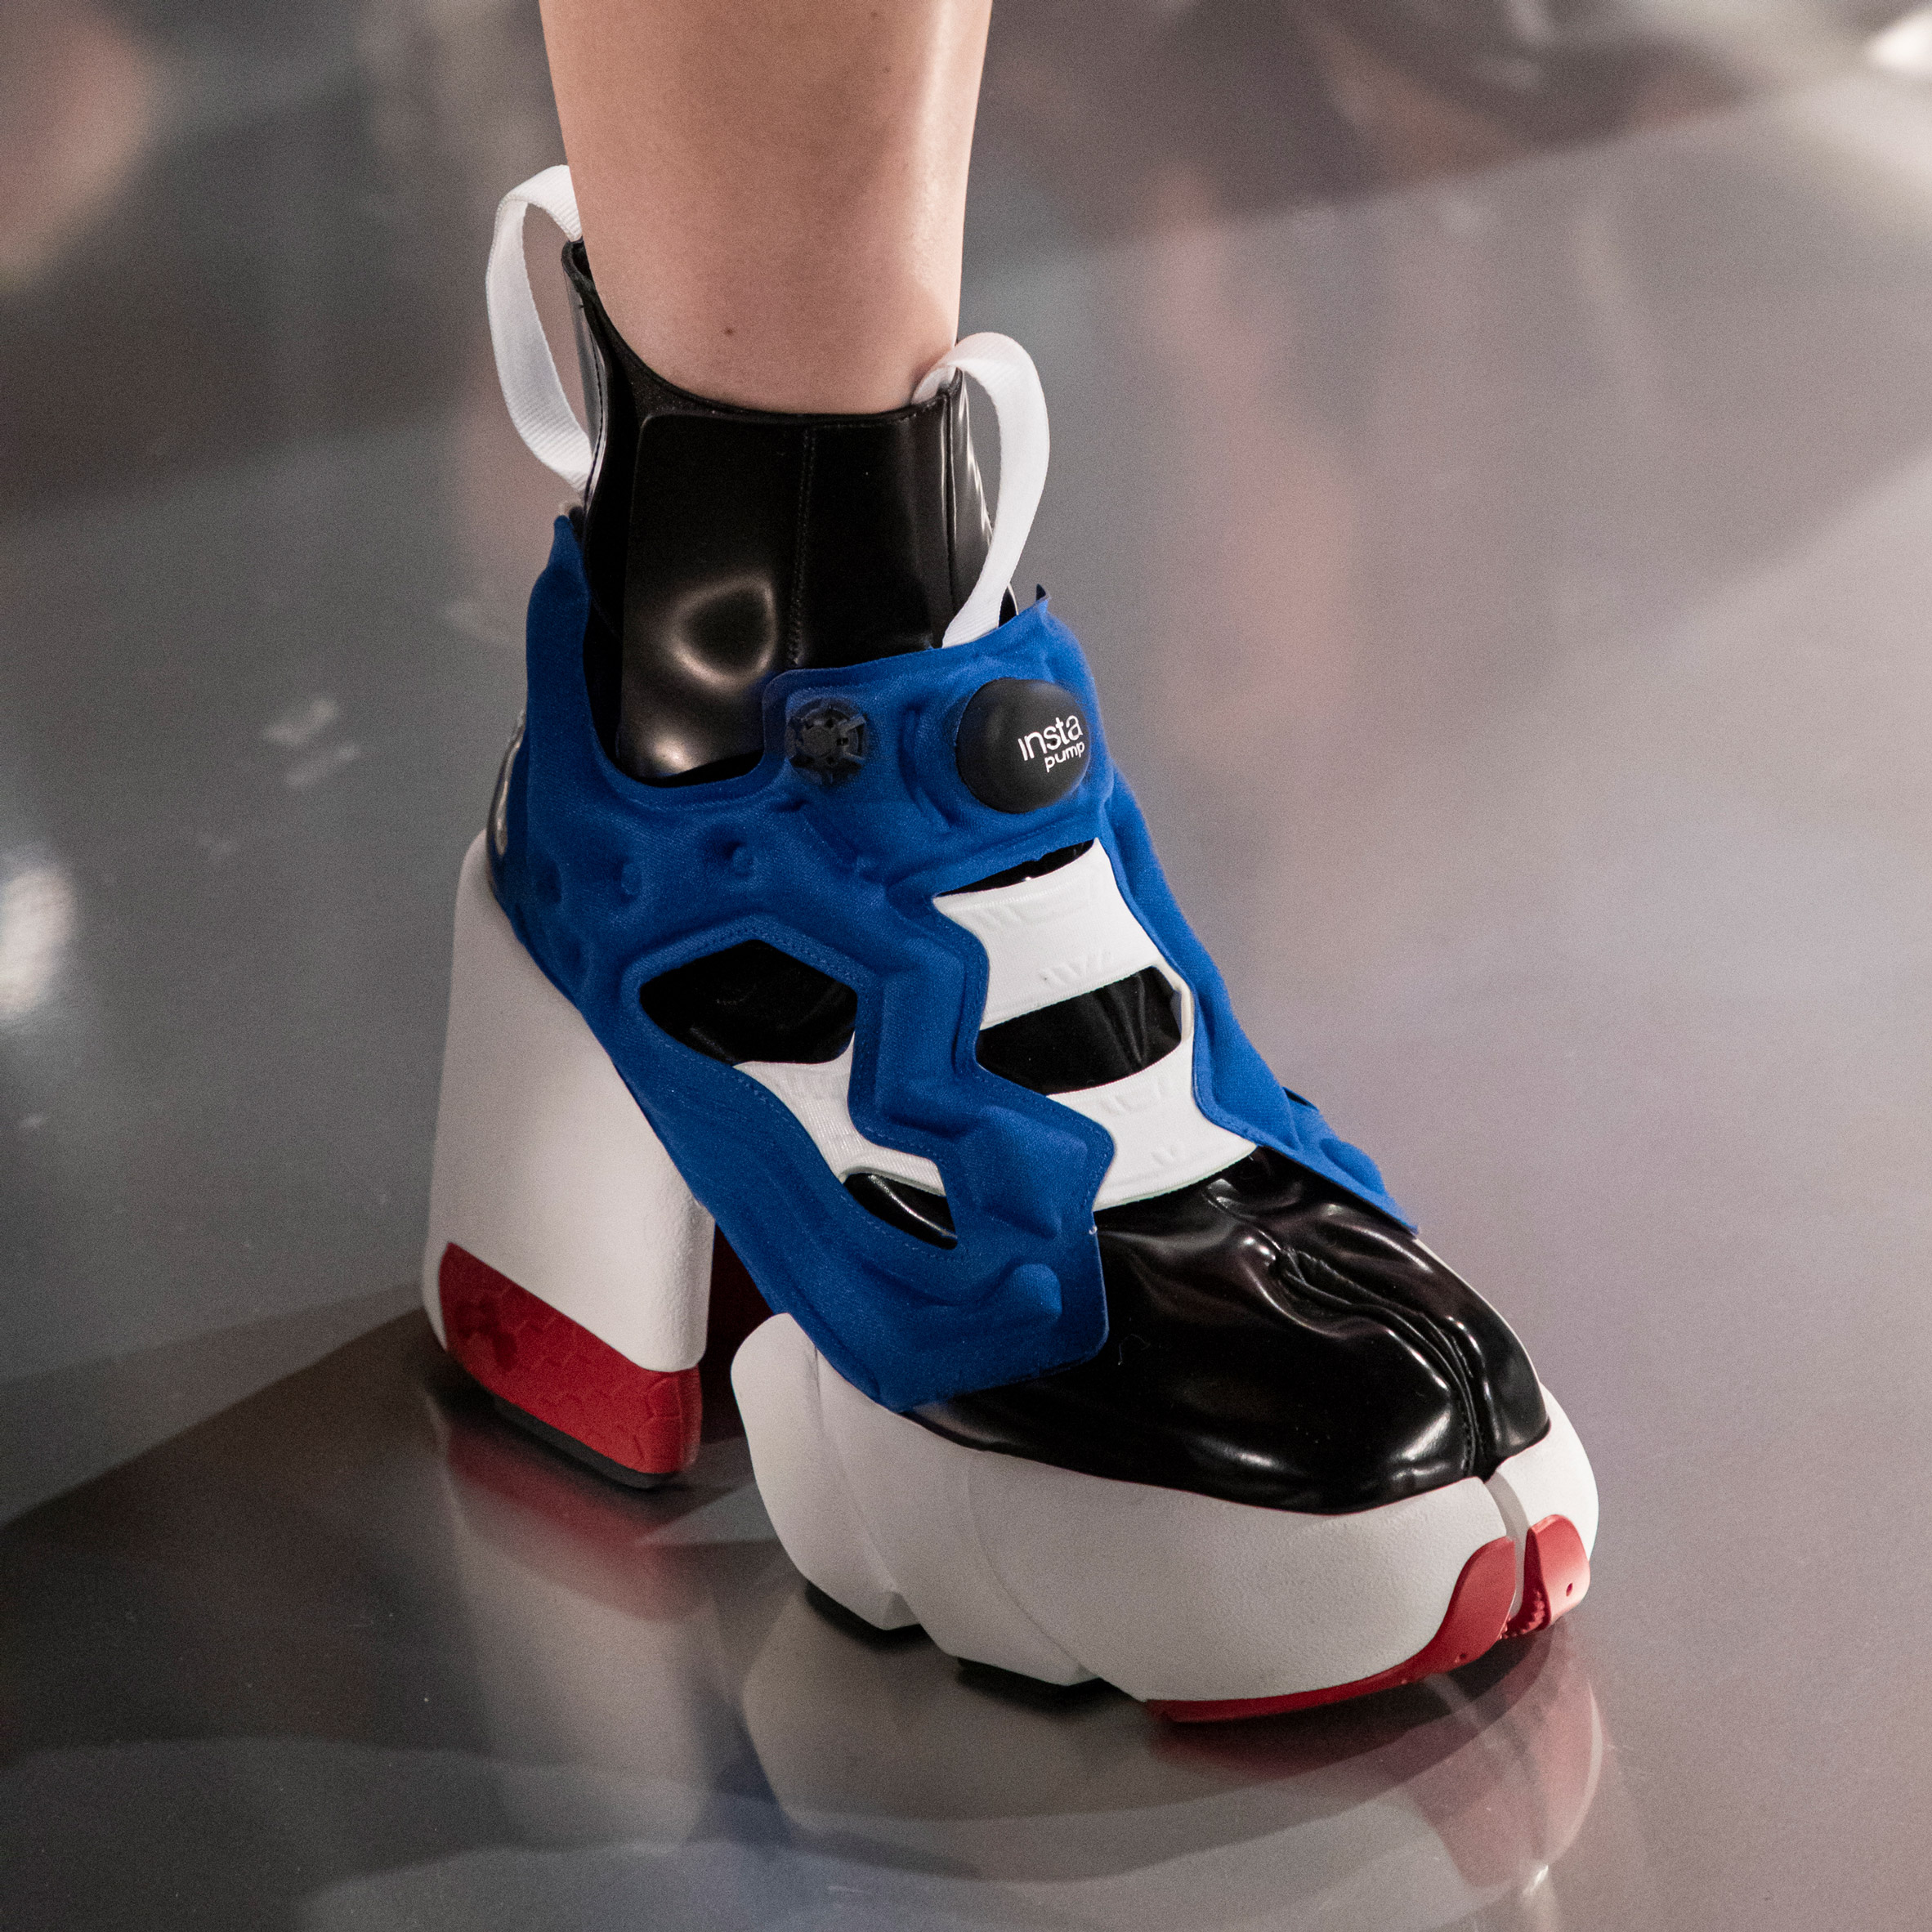 Maison Margiela and Reebok design split-toe sneakers for the